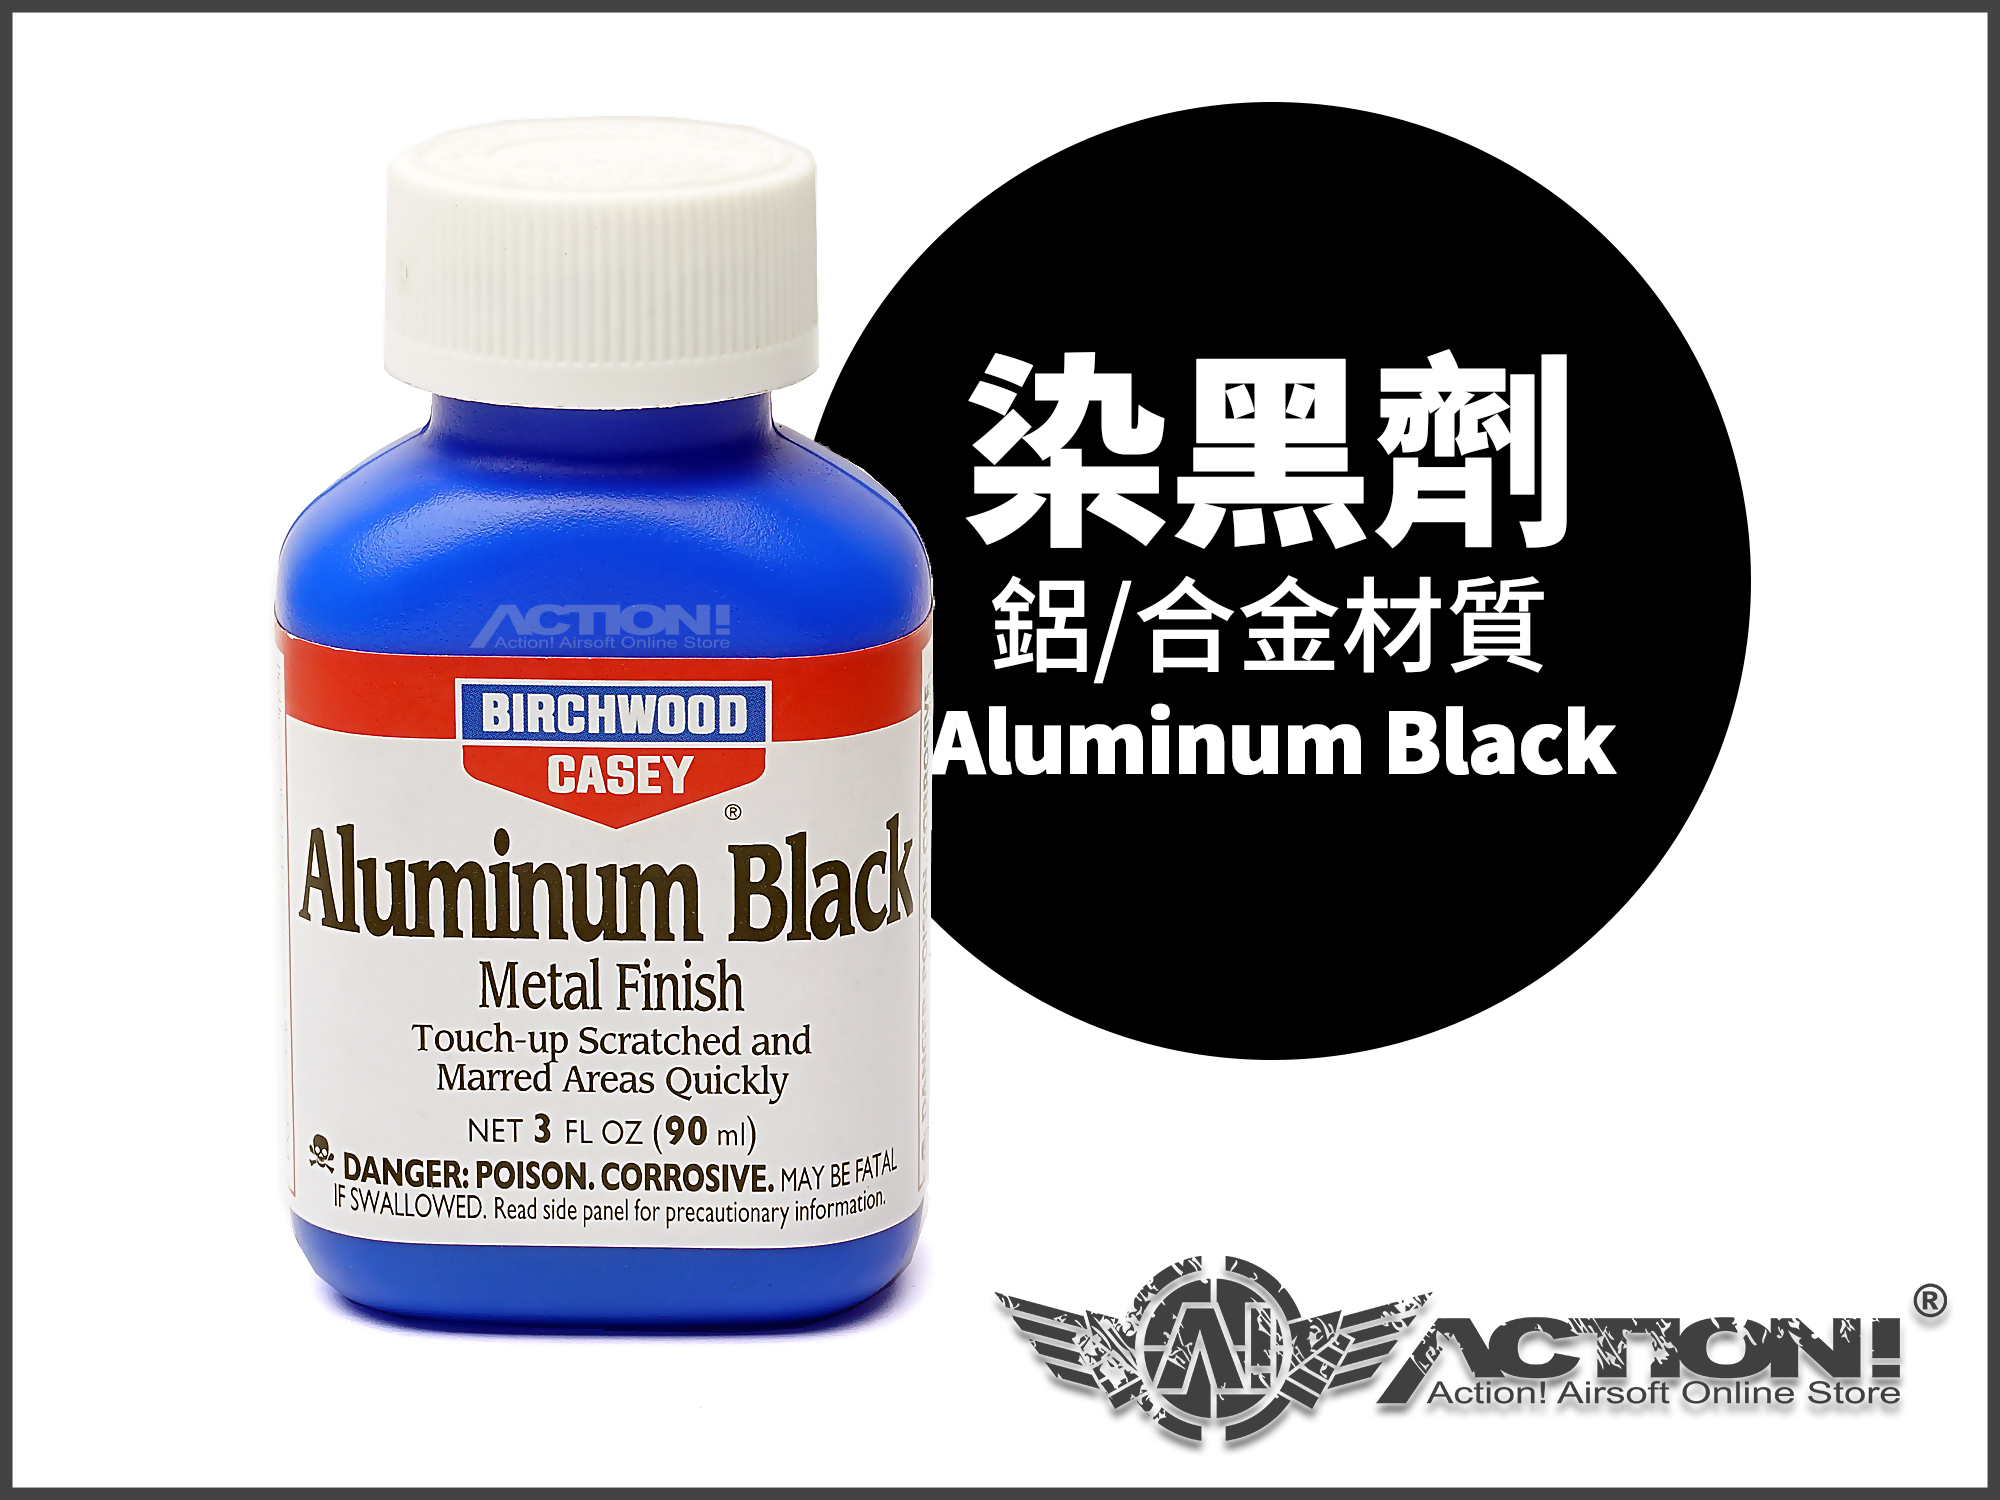 Birchwood Casey Aluminum Black, Super Blue and Metal Work on a